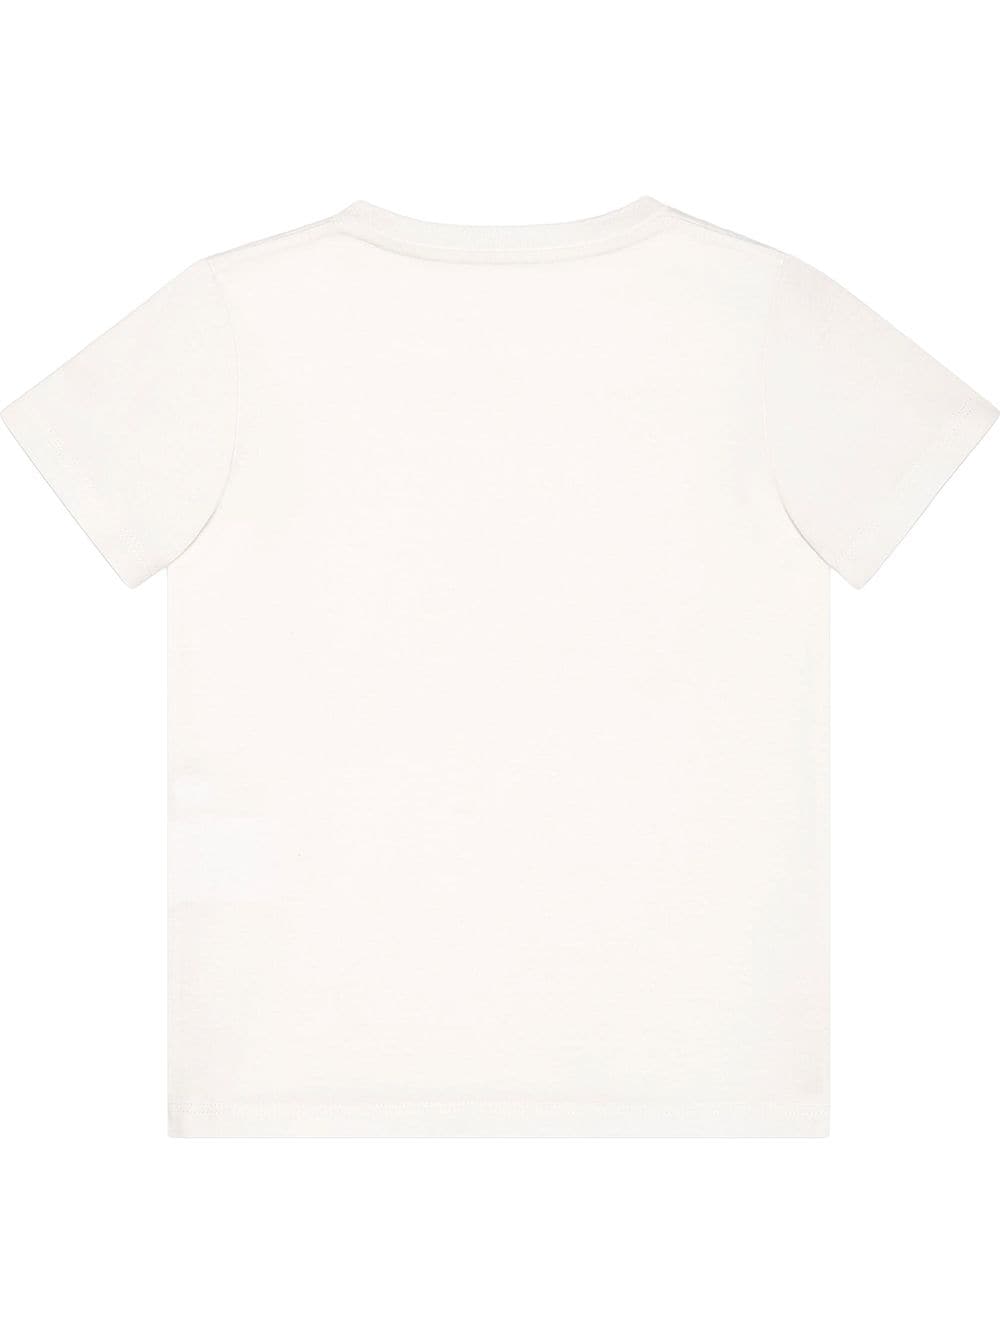 White children's t-shirt with logo